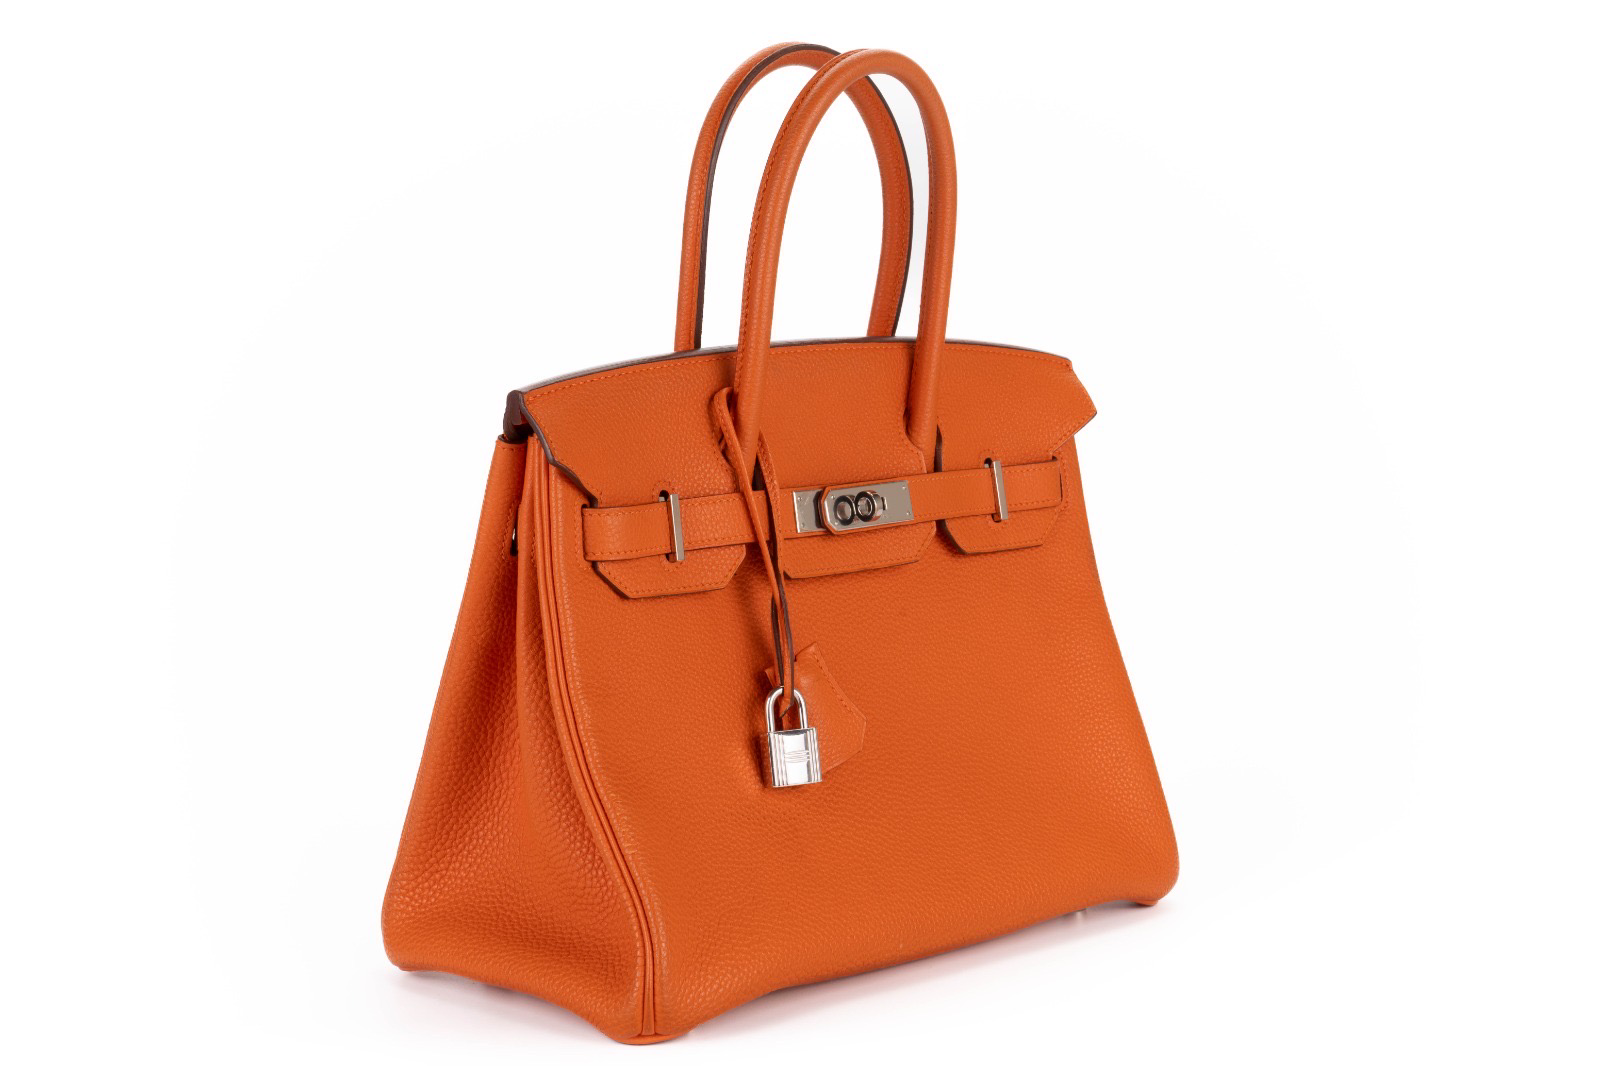 Hermes Birkin Handbag Orange Togo with Palladium Hardware 30